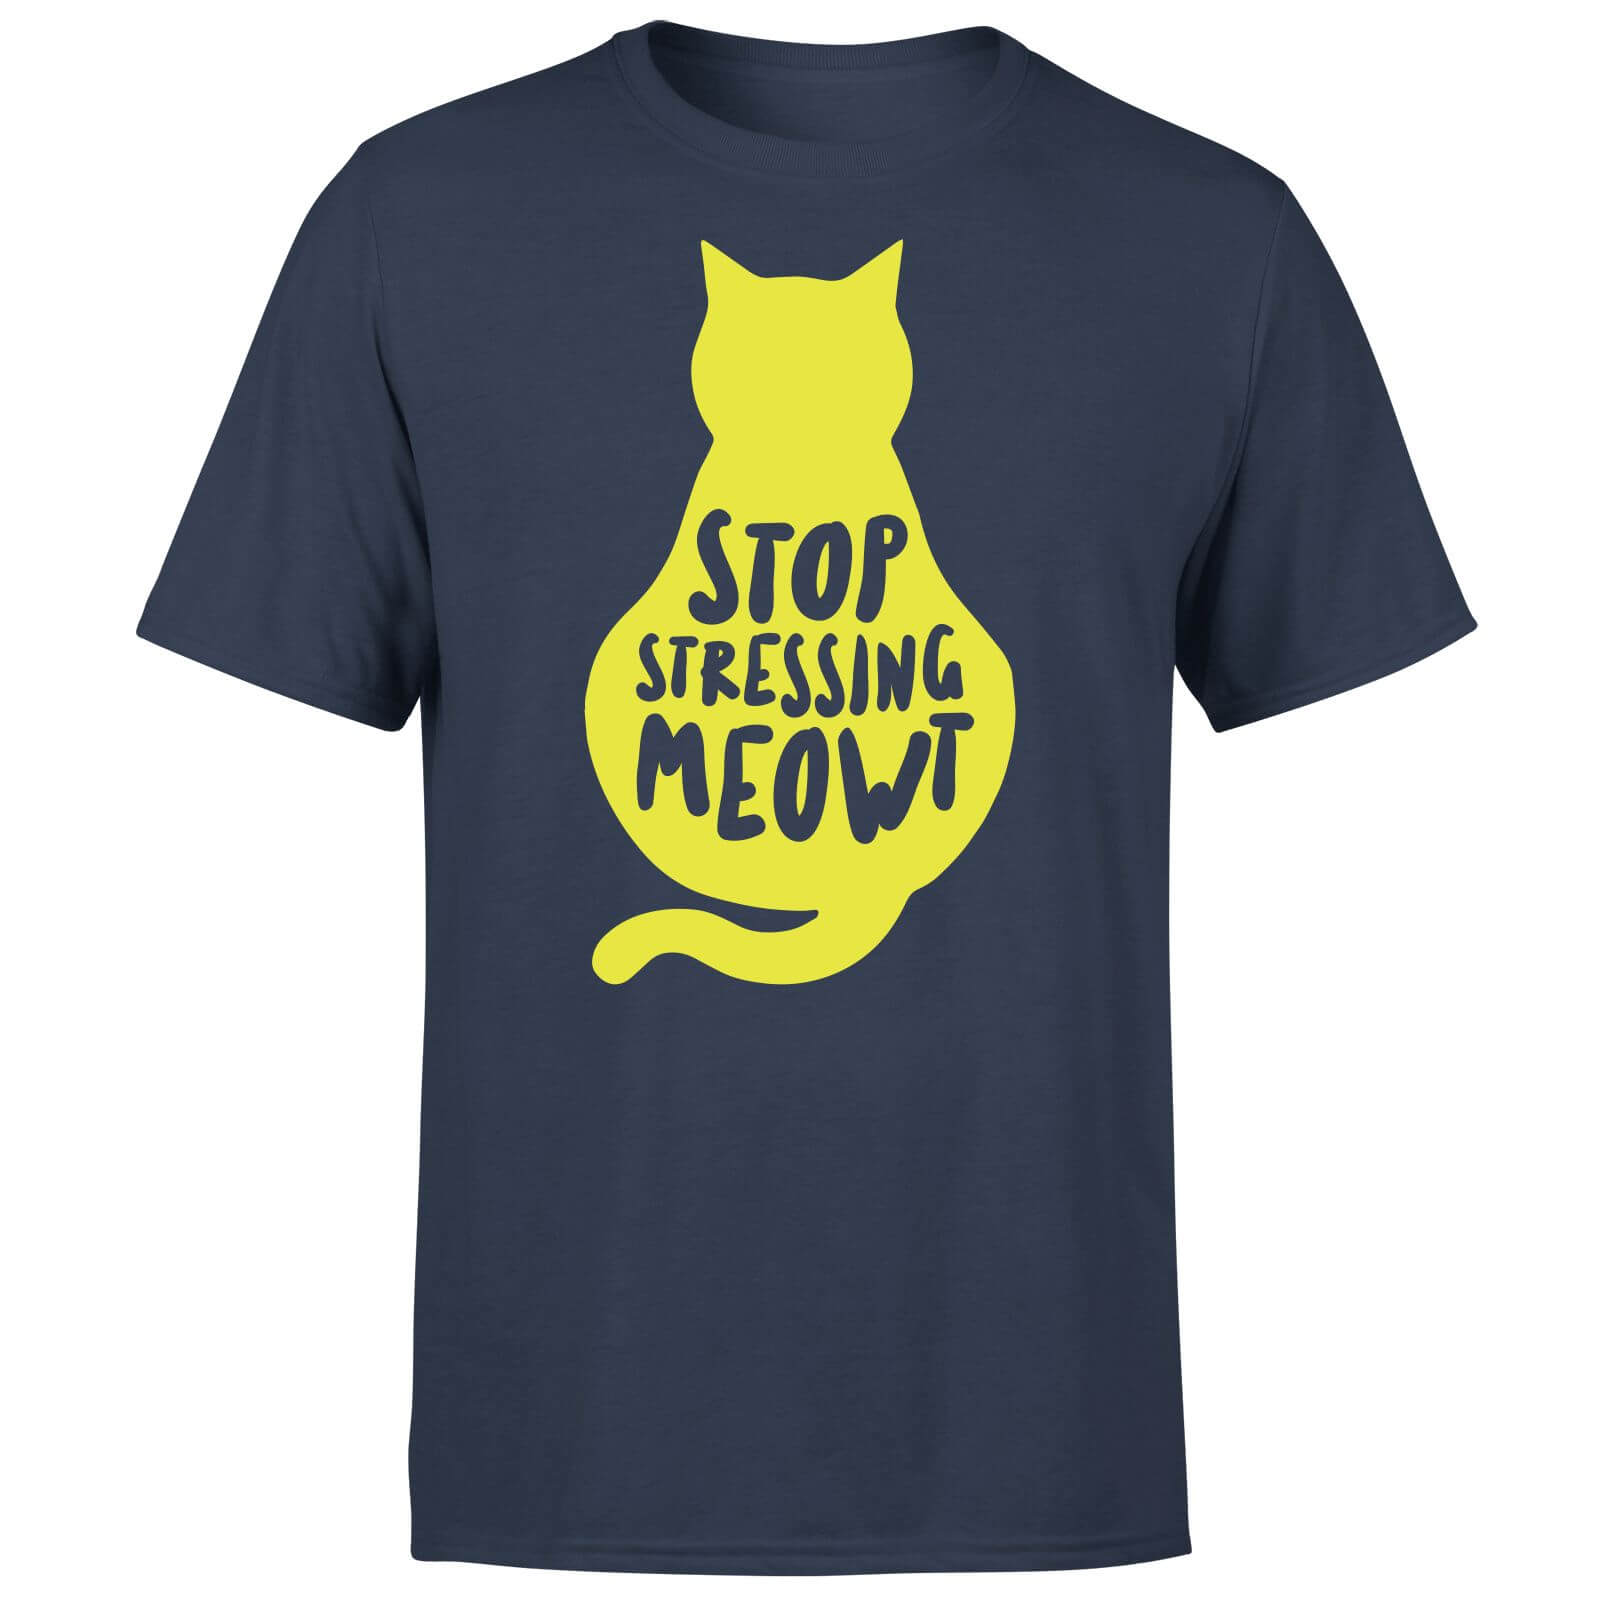 Stop Stressing Meowt T-Shirt - Navy - S